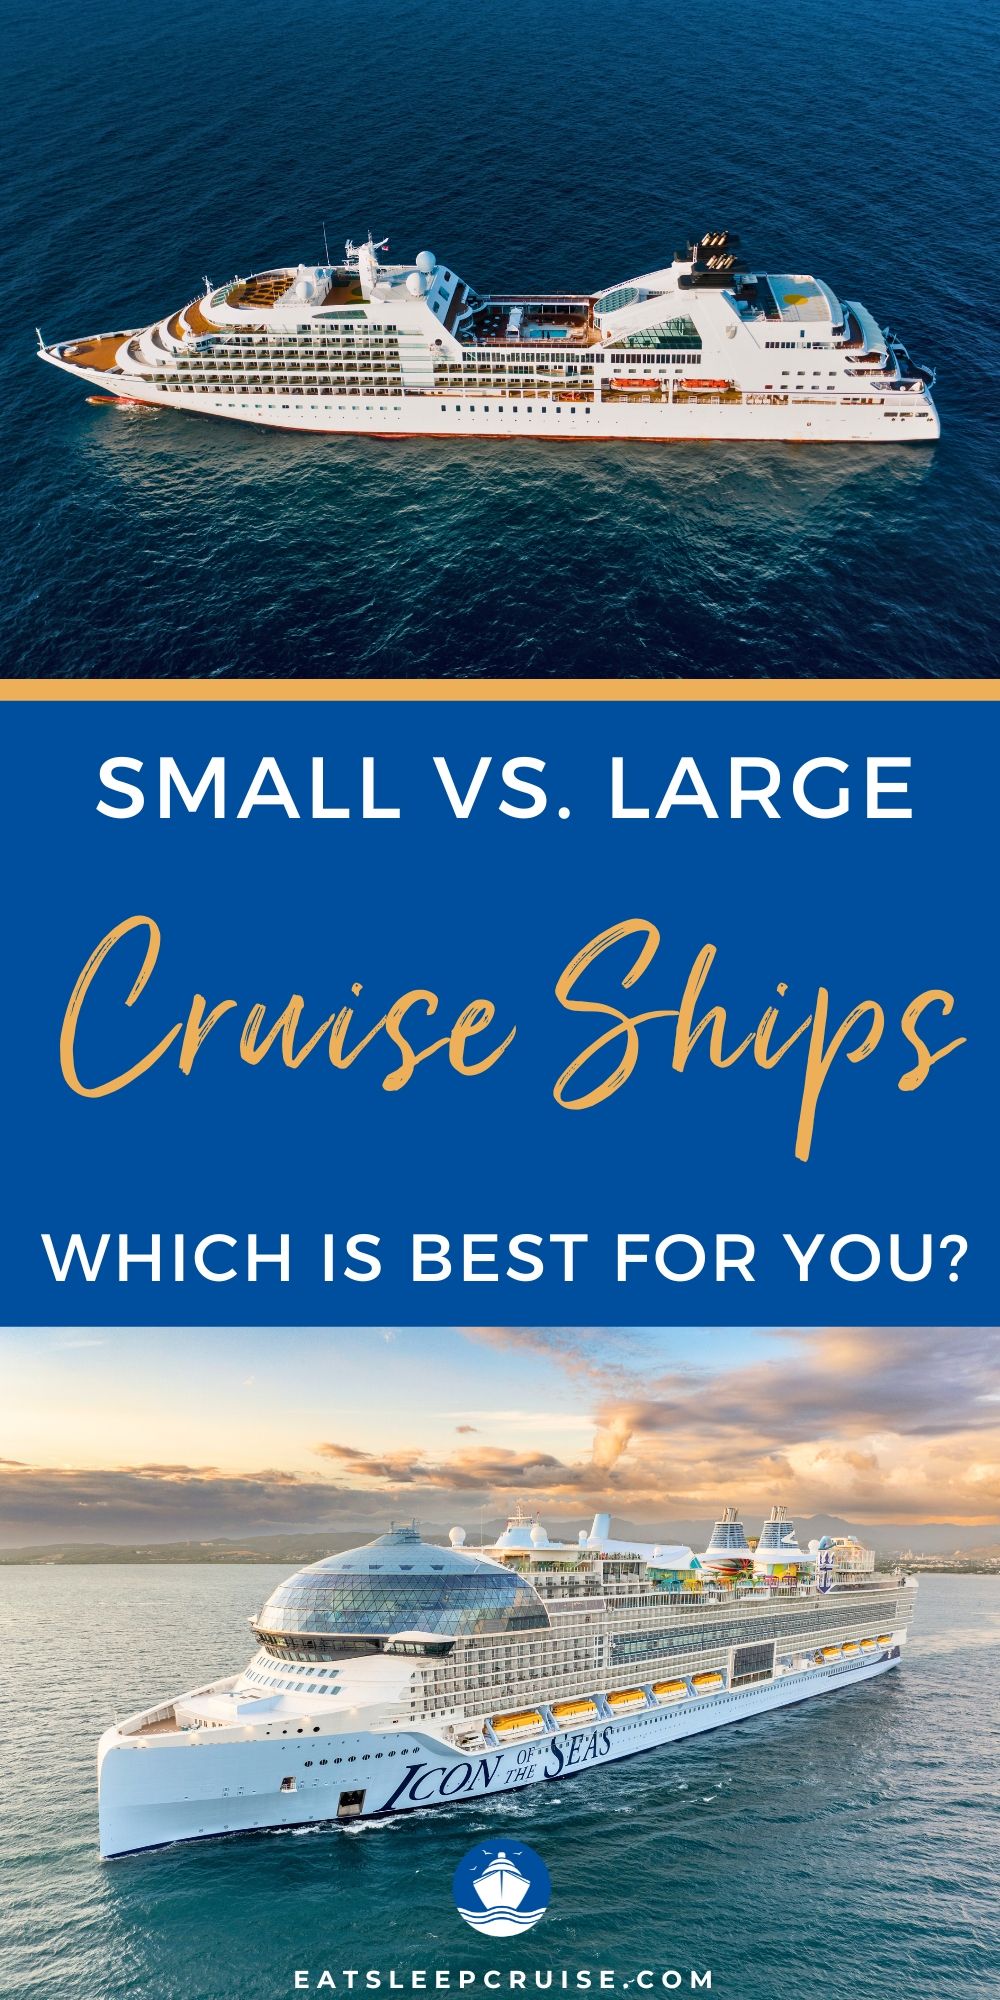 Small Cruise Ships vs. Large Cruise Ships